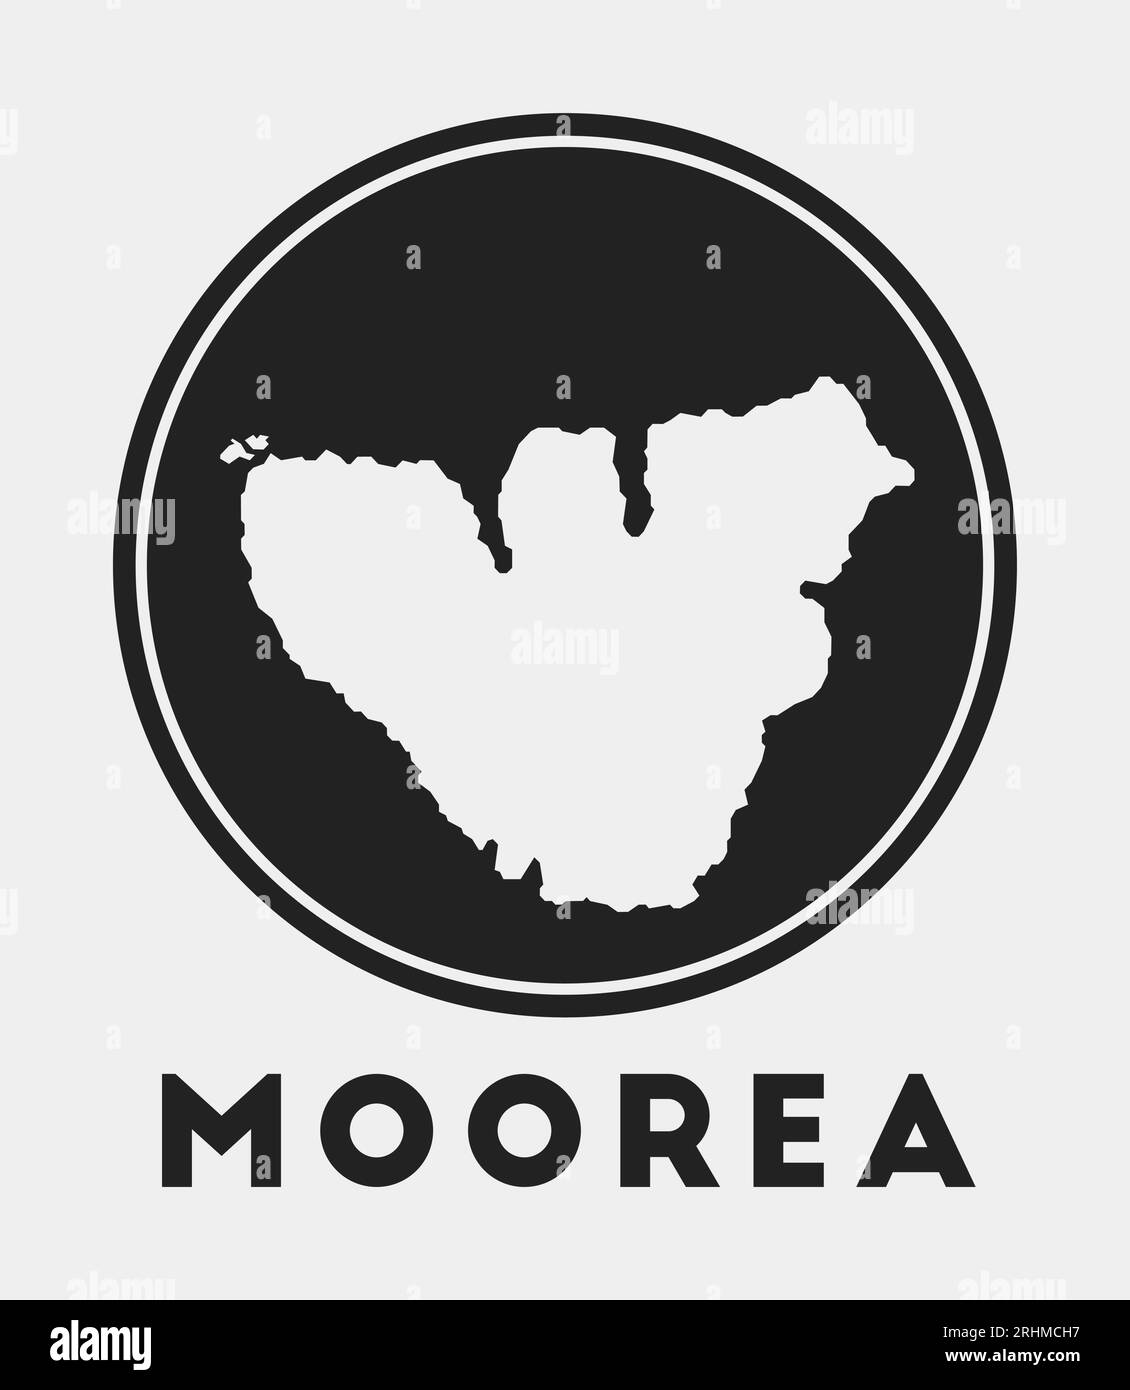 Moorea icon. Round logo with island map and title. Stylish Moorea badge ...